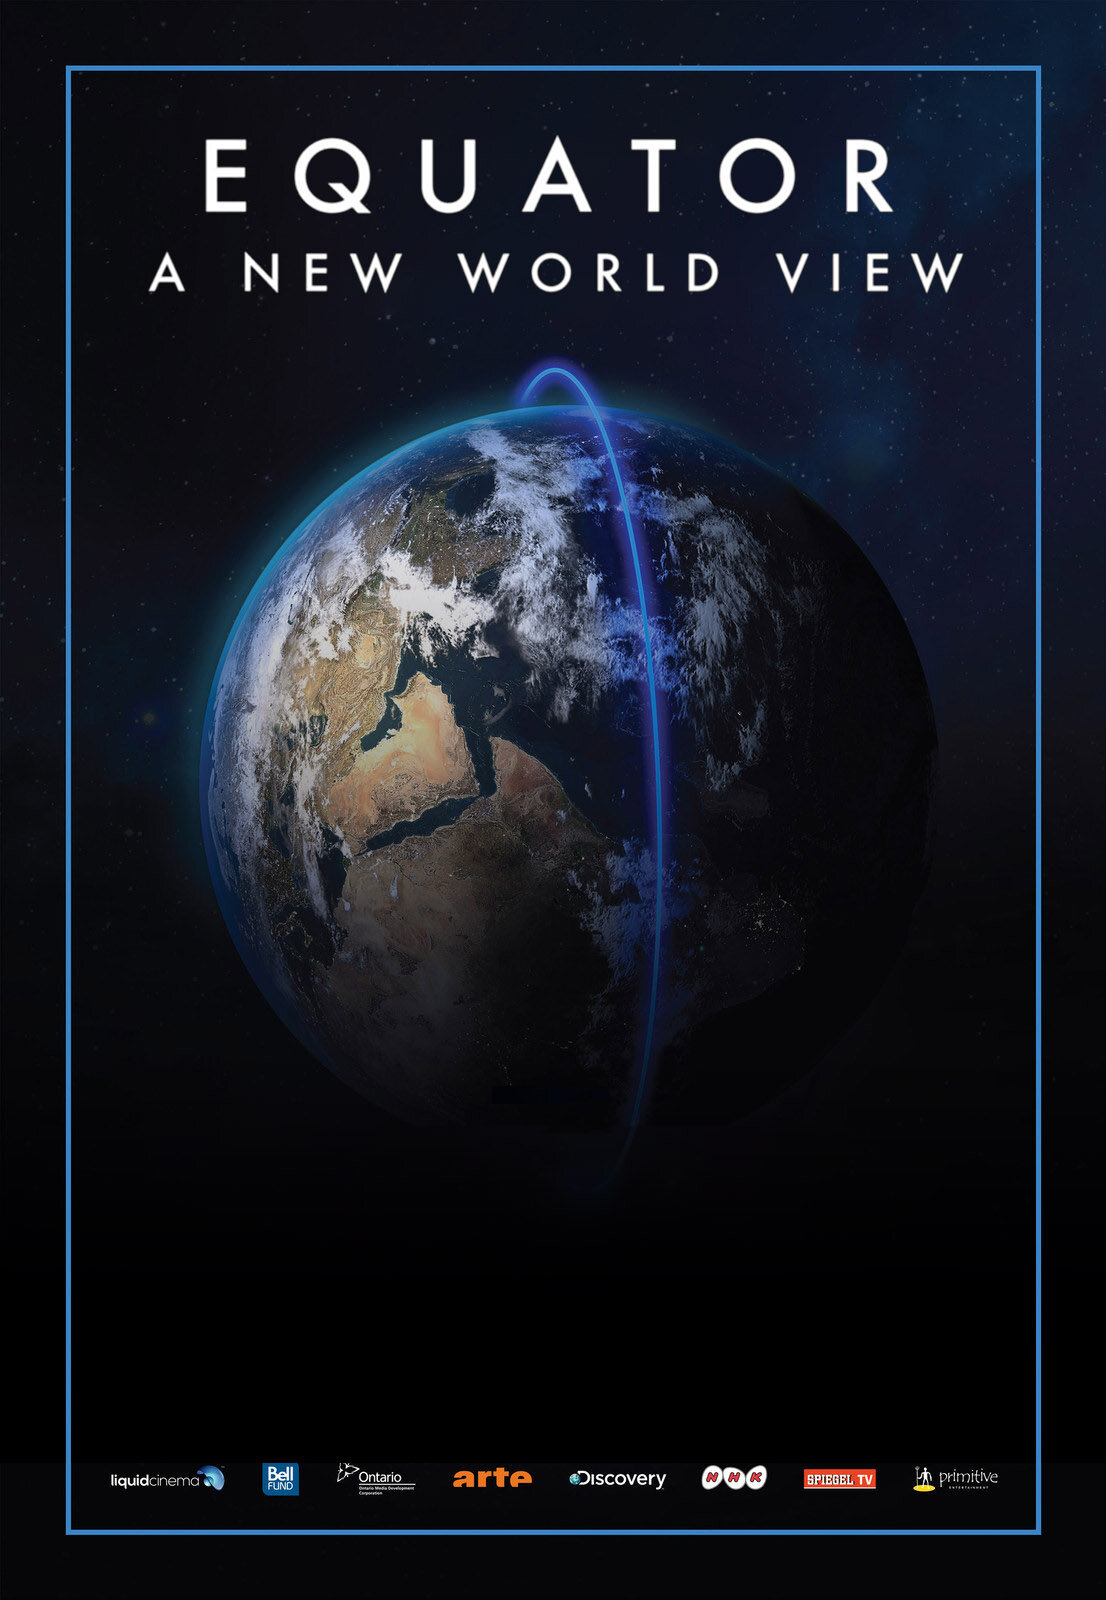 Equator: A New World View